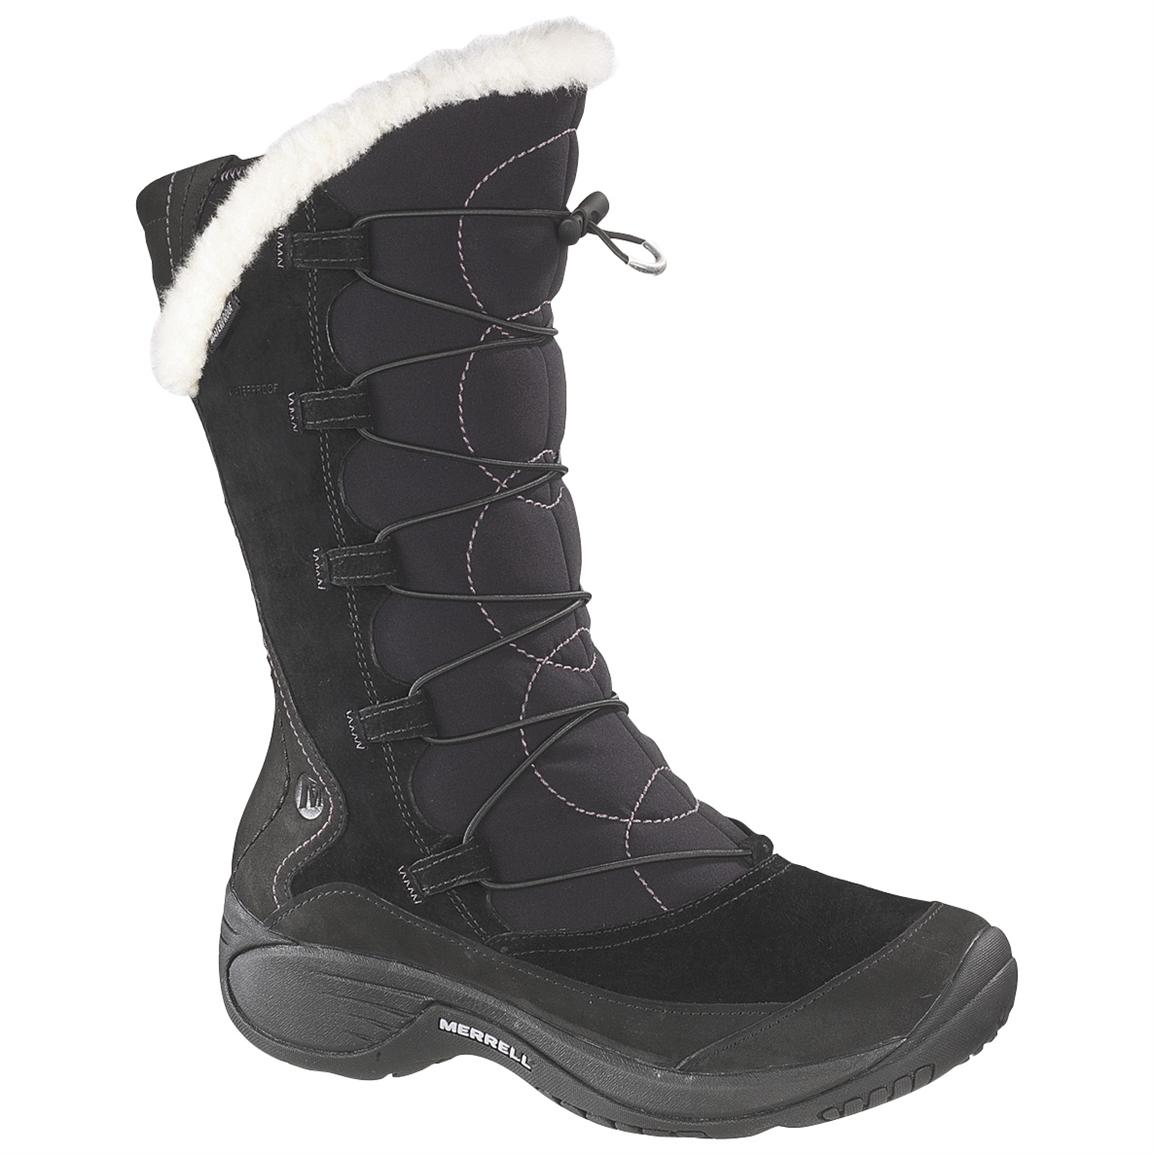 Women's MerrellÂ® Encore Apex Waterproof Boots - 211955, Winter & Snow Boots at Sportsman's Guide